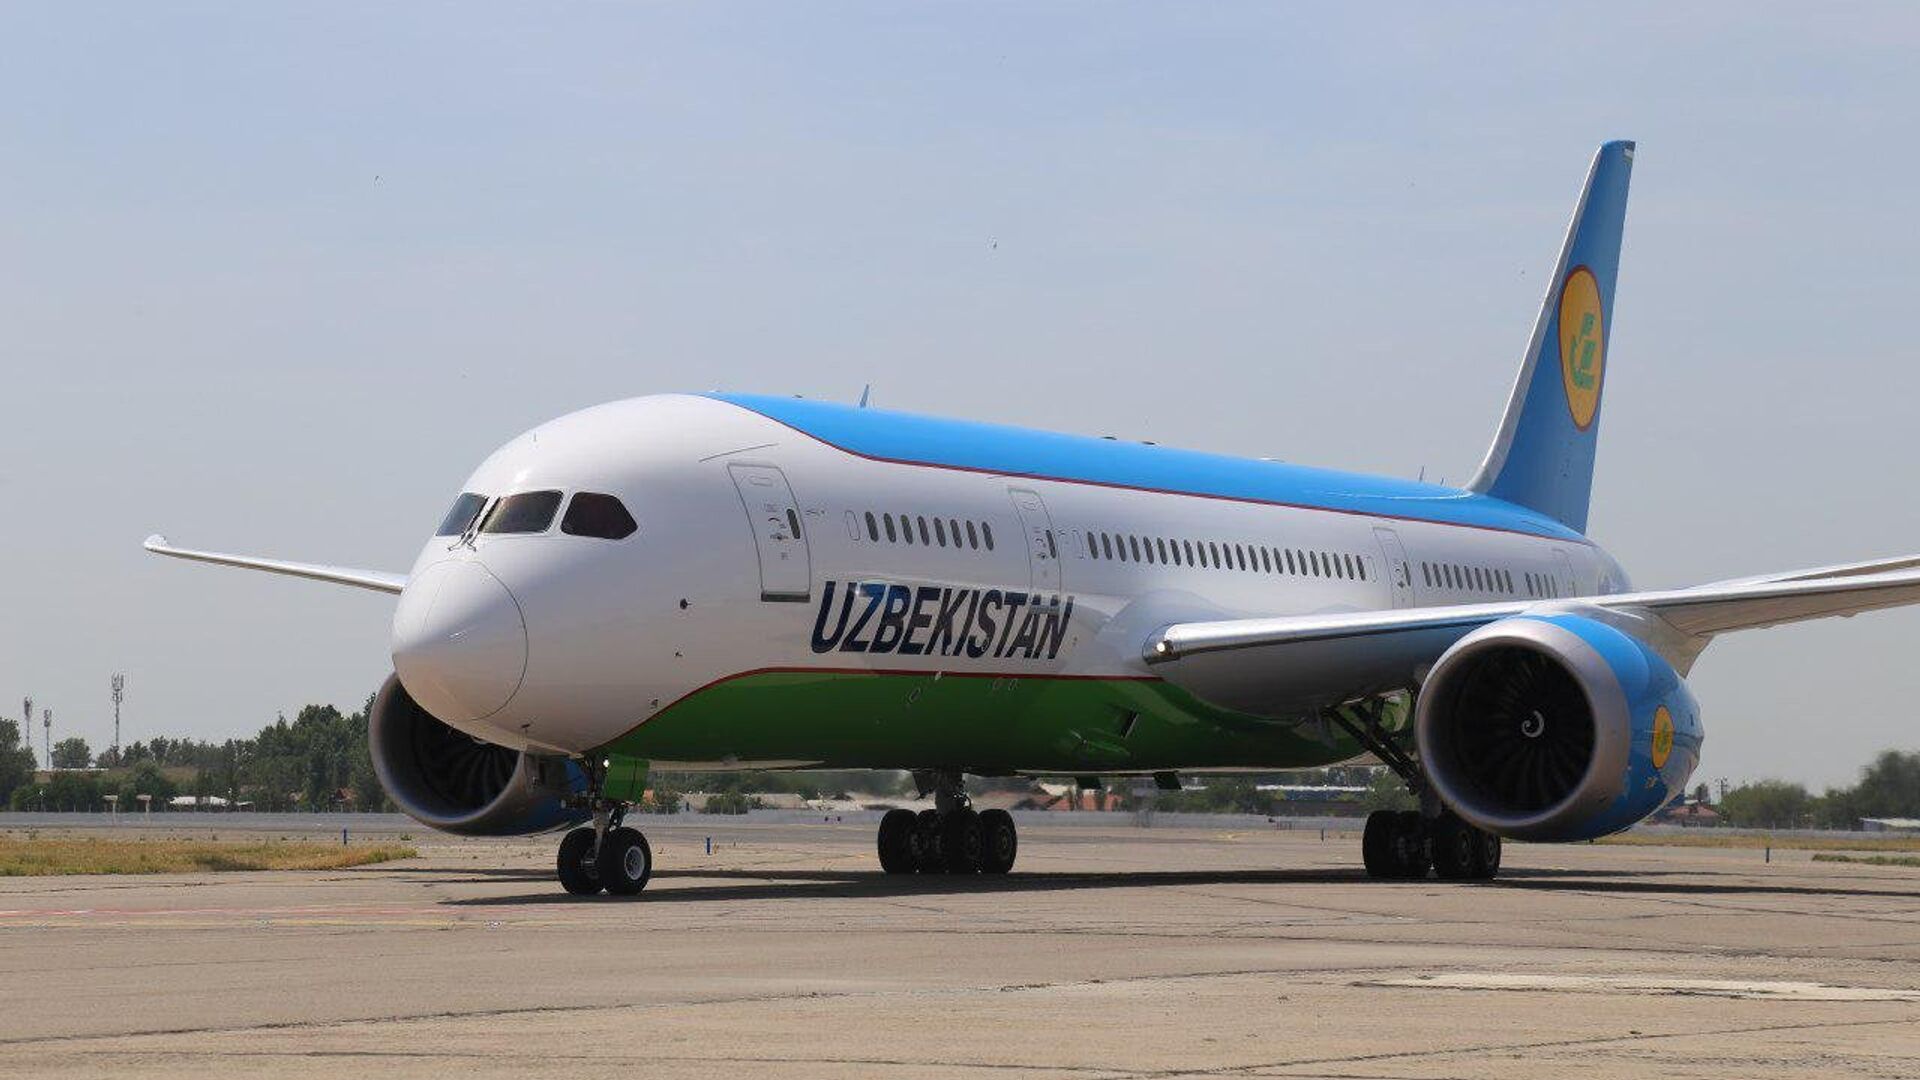 “Узбекистон хаво йуллари” передали новый Boeing 787 Dreamliner - Sputnik Узбекистан, 1920, 25.11.2021